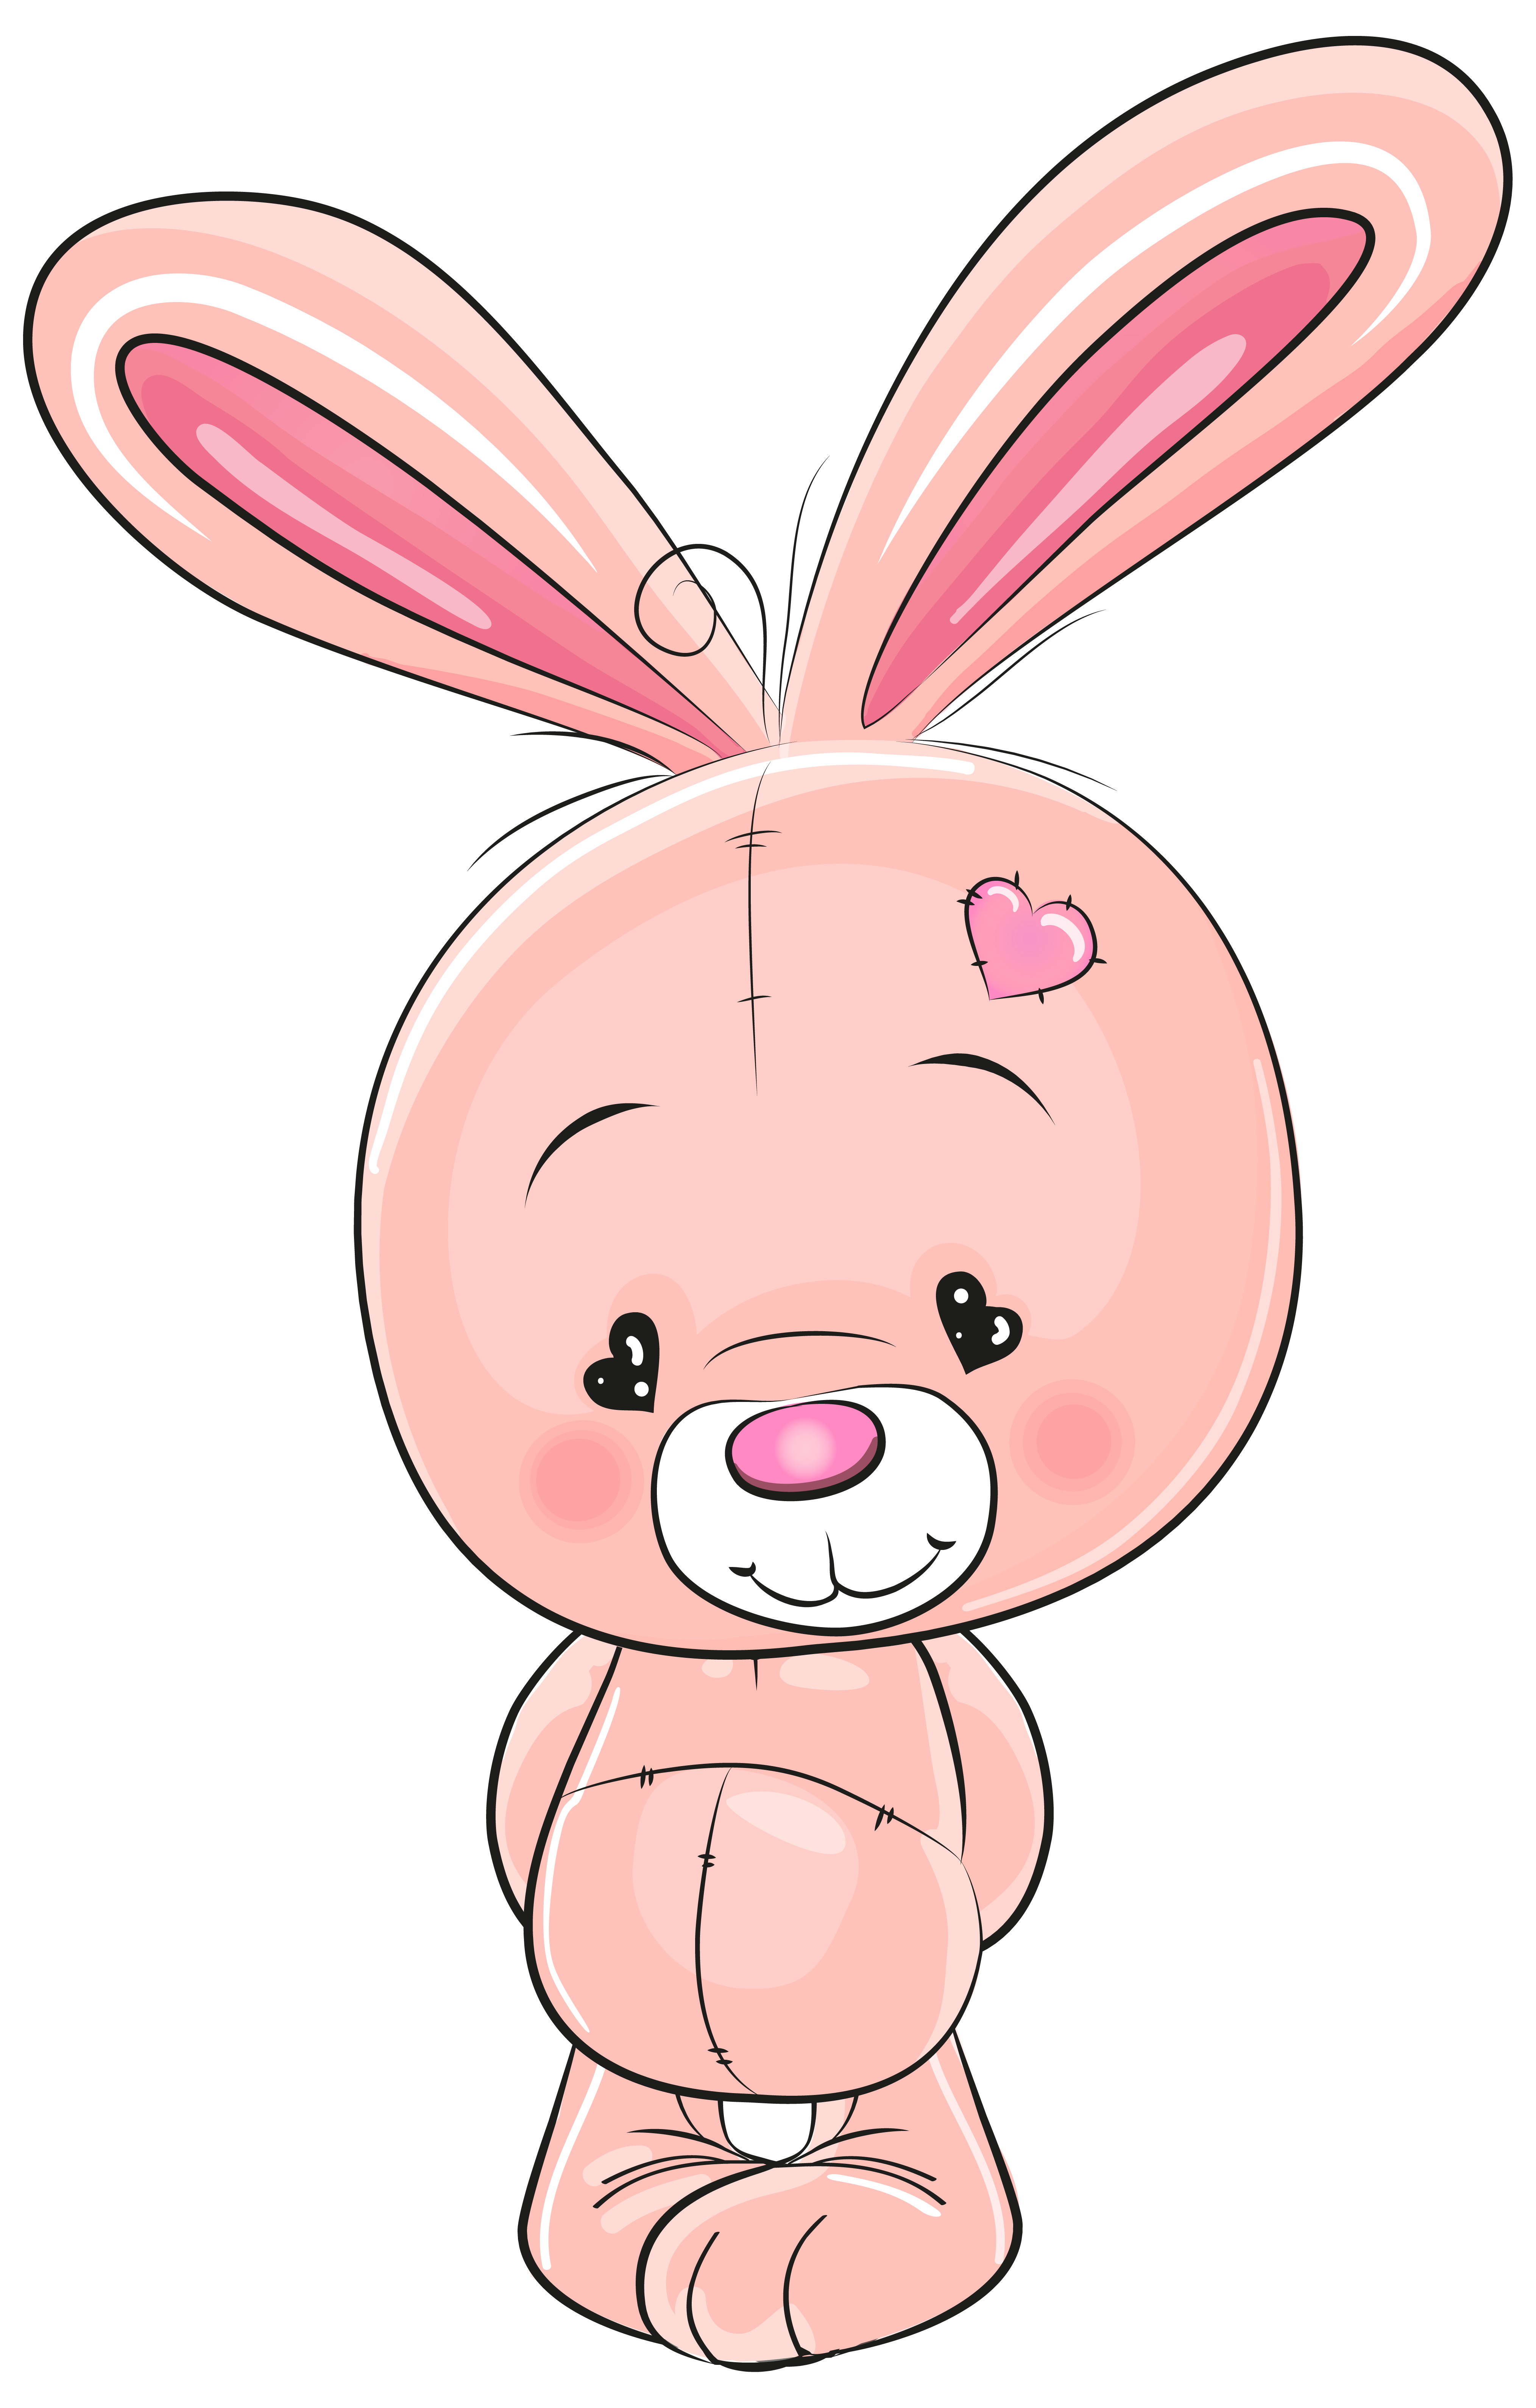 Cute Pink Bunny PNG Clip Art Image.